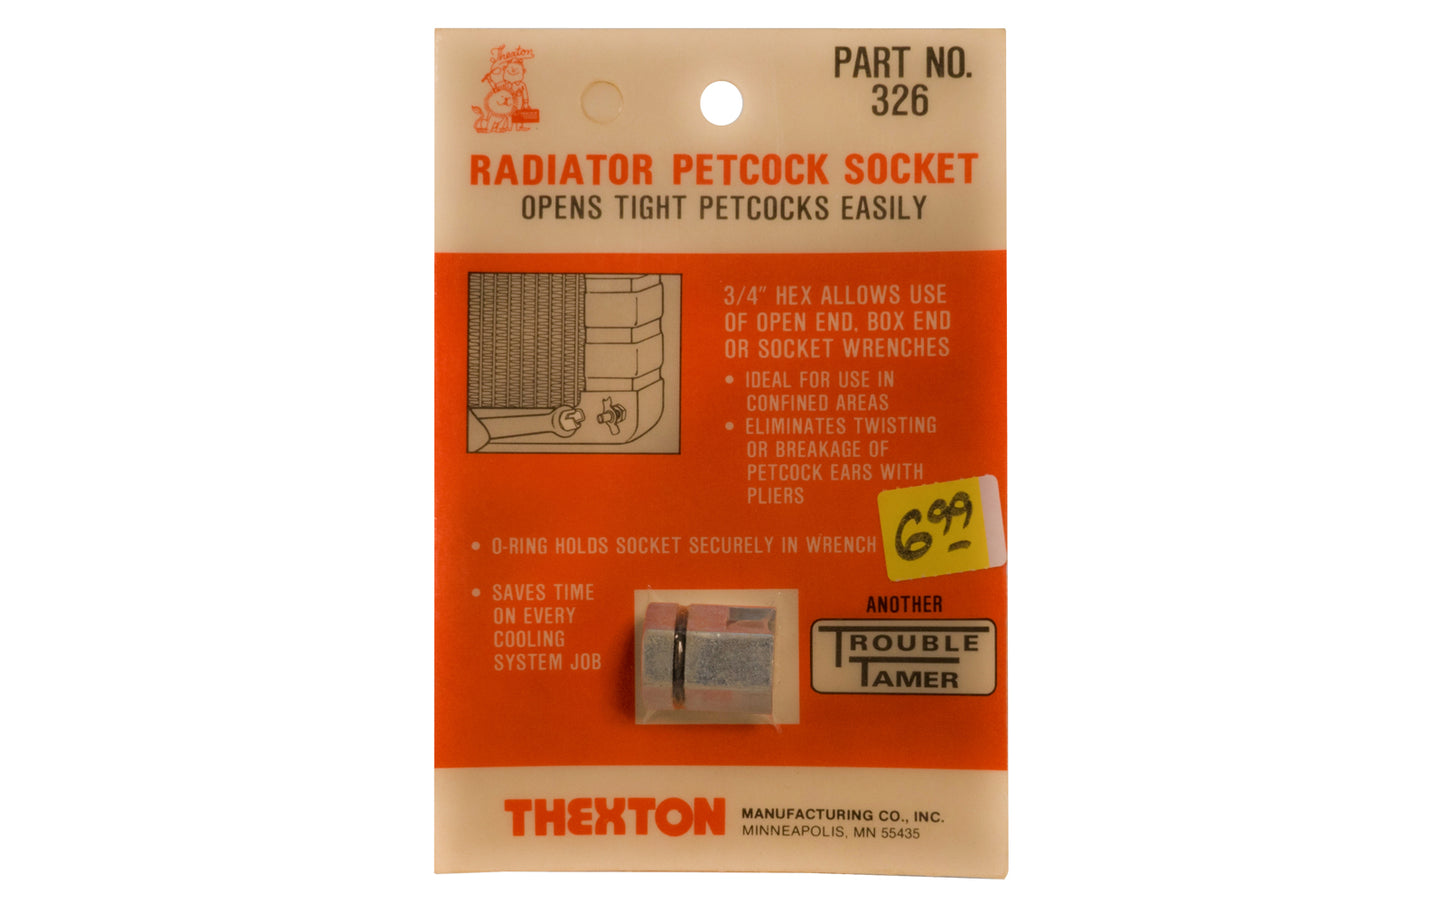 Thexton Radiator Petcock Socket